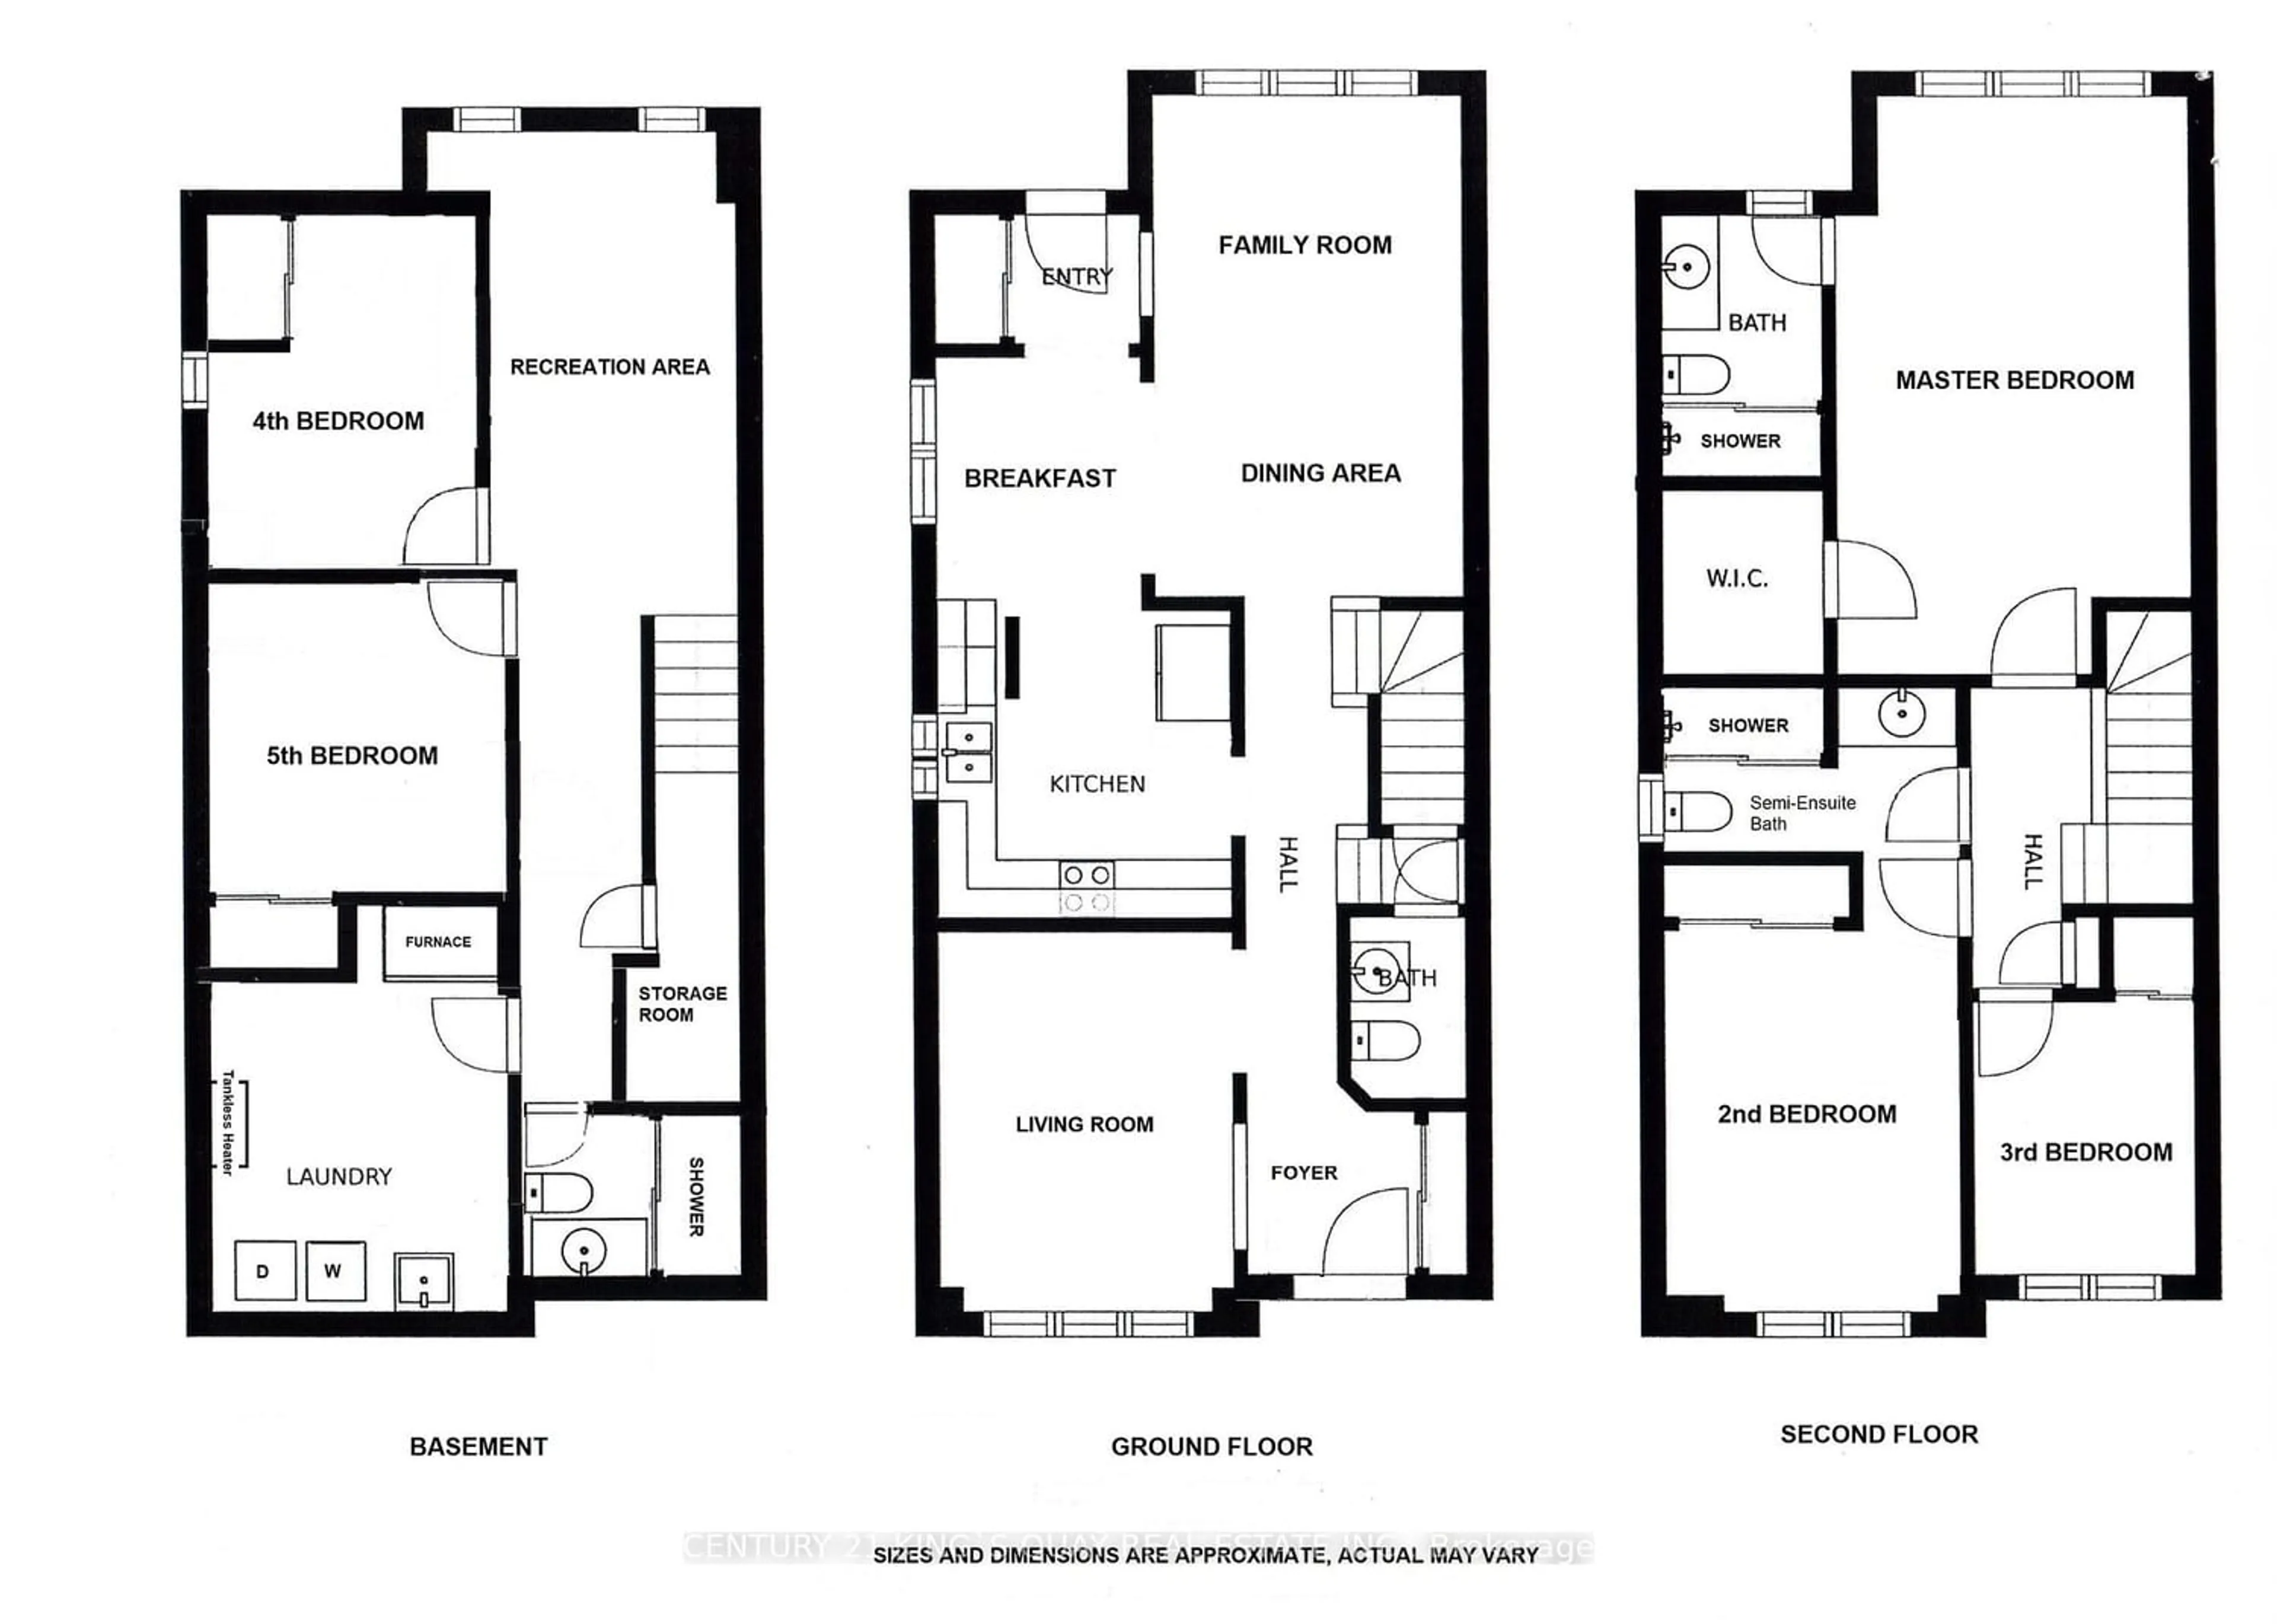 Floor plan for 23 Stockport Rd, Markham Ontario L6B 0R3